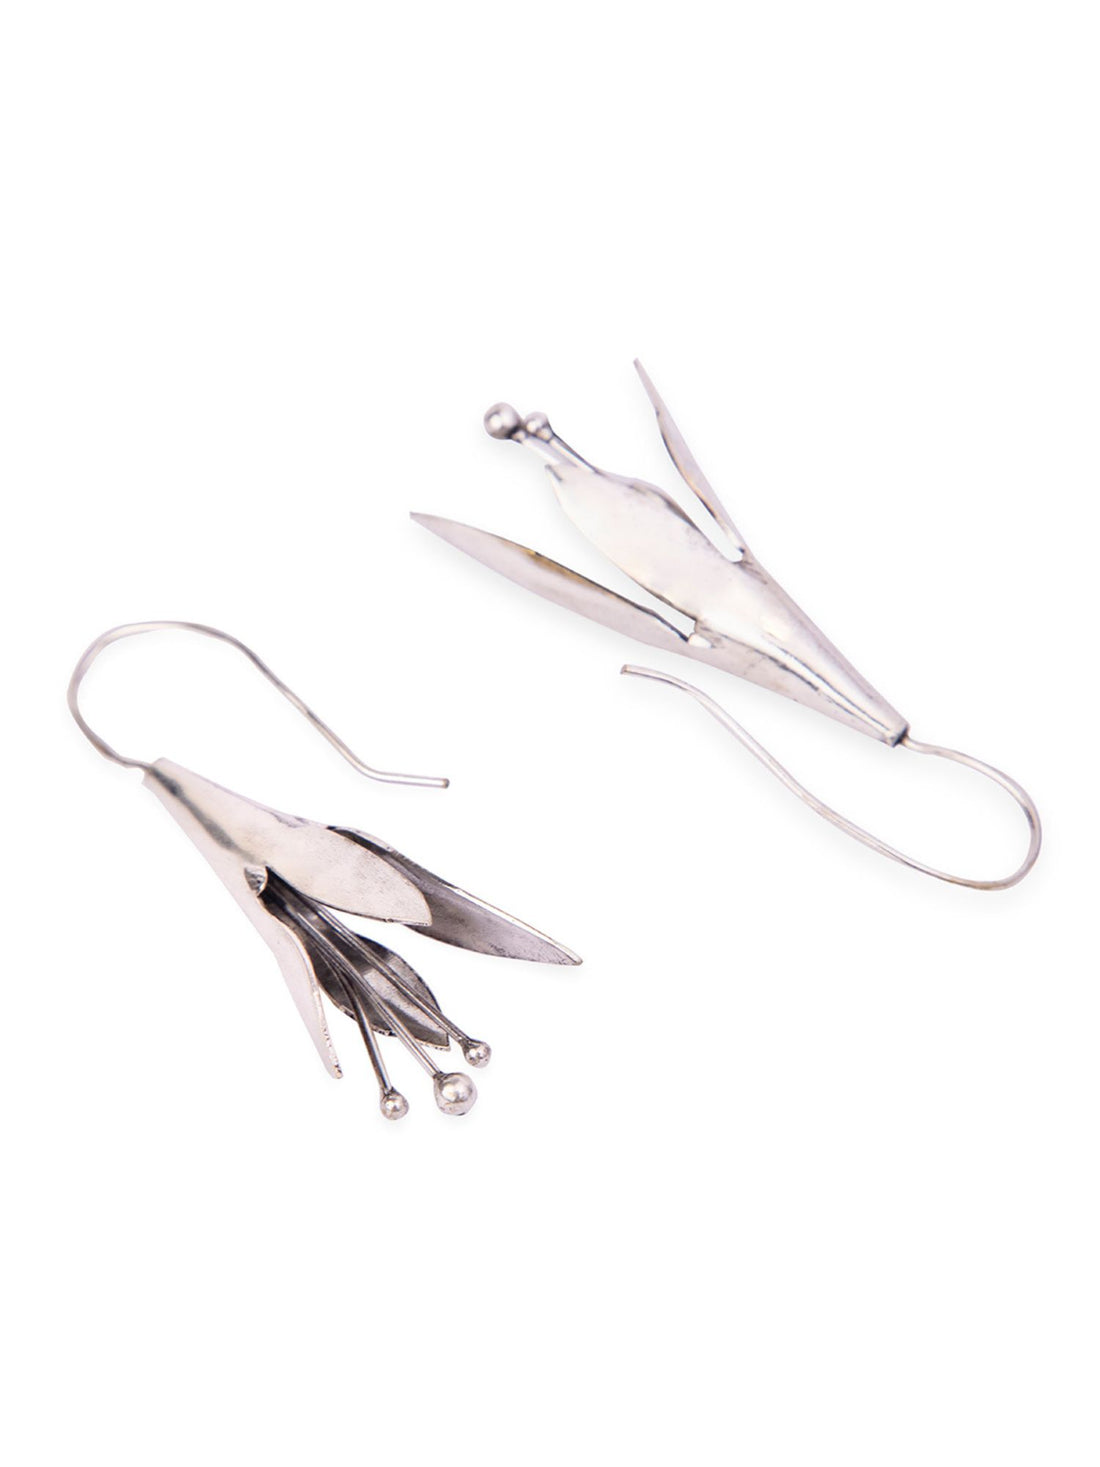 Daily Wear Drops and Danglers Earrings - Minimal Silver-Plated Brass Earrings By Studio One Love